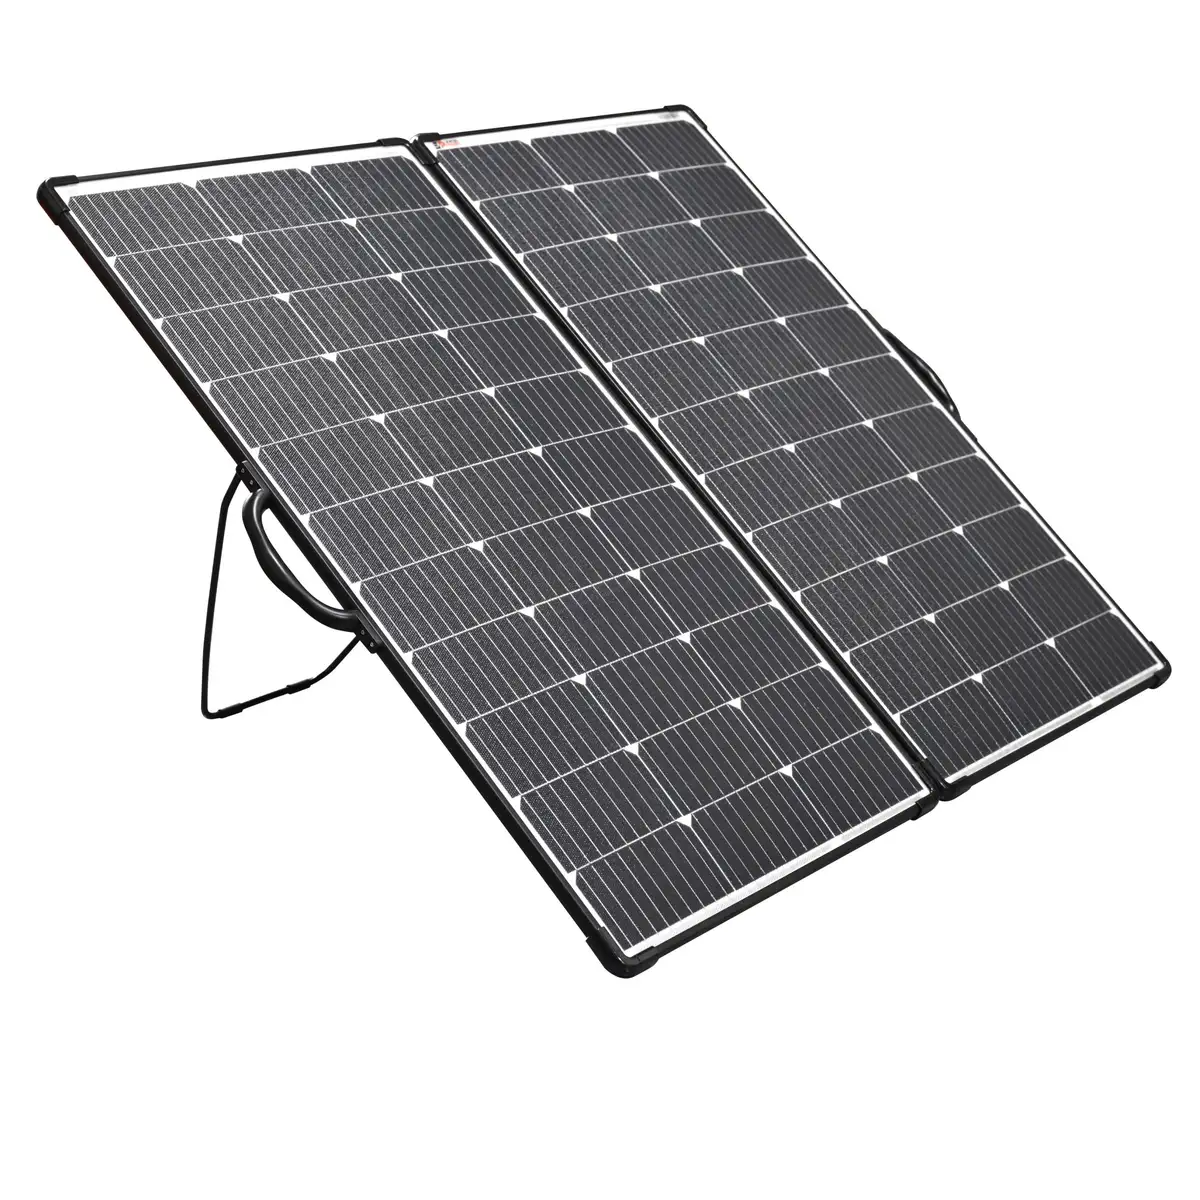 Excel Power 200W Portable Folding Solar Panel